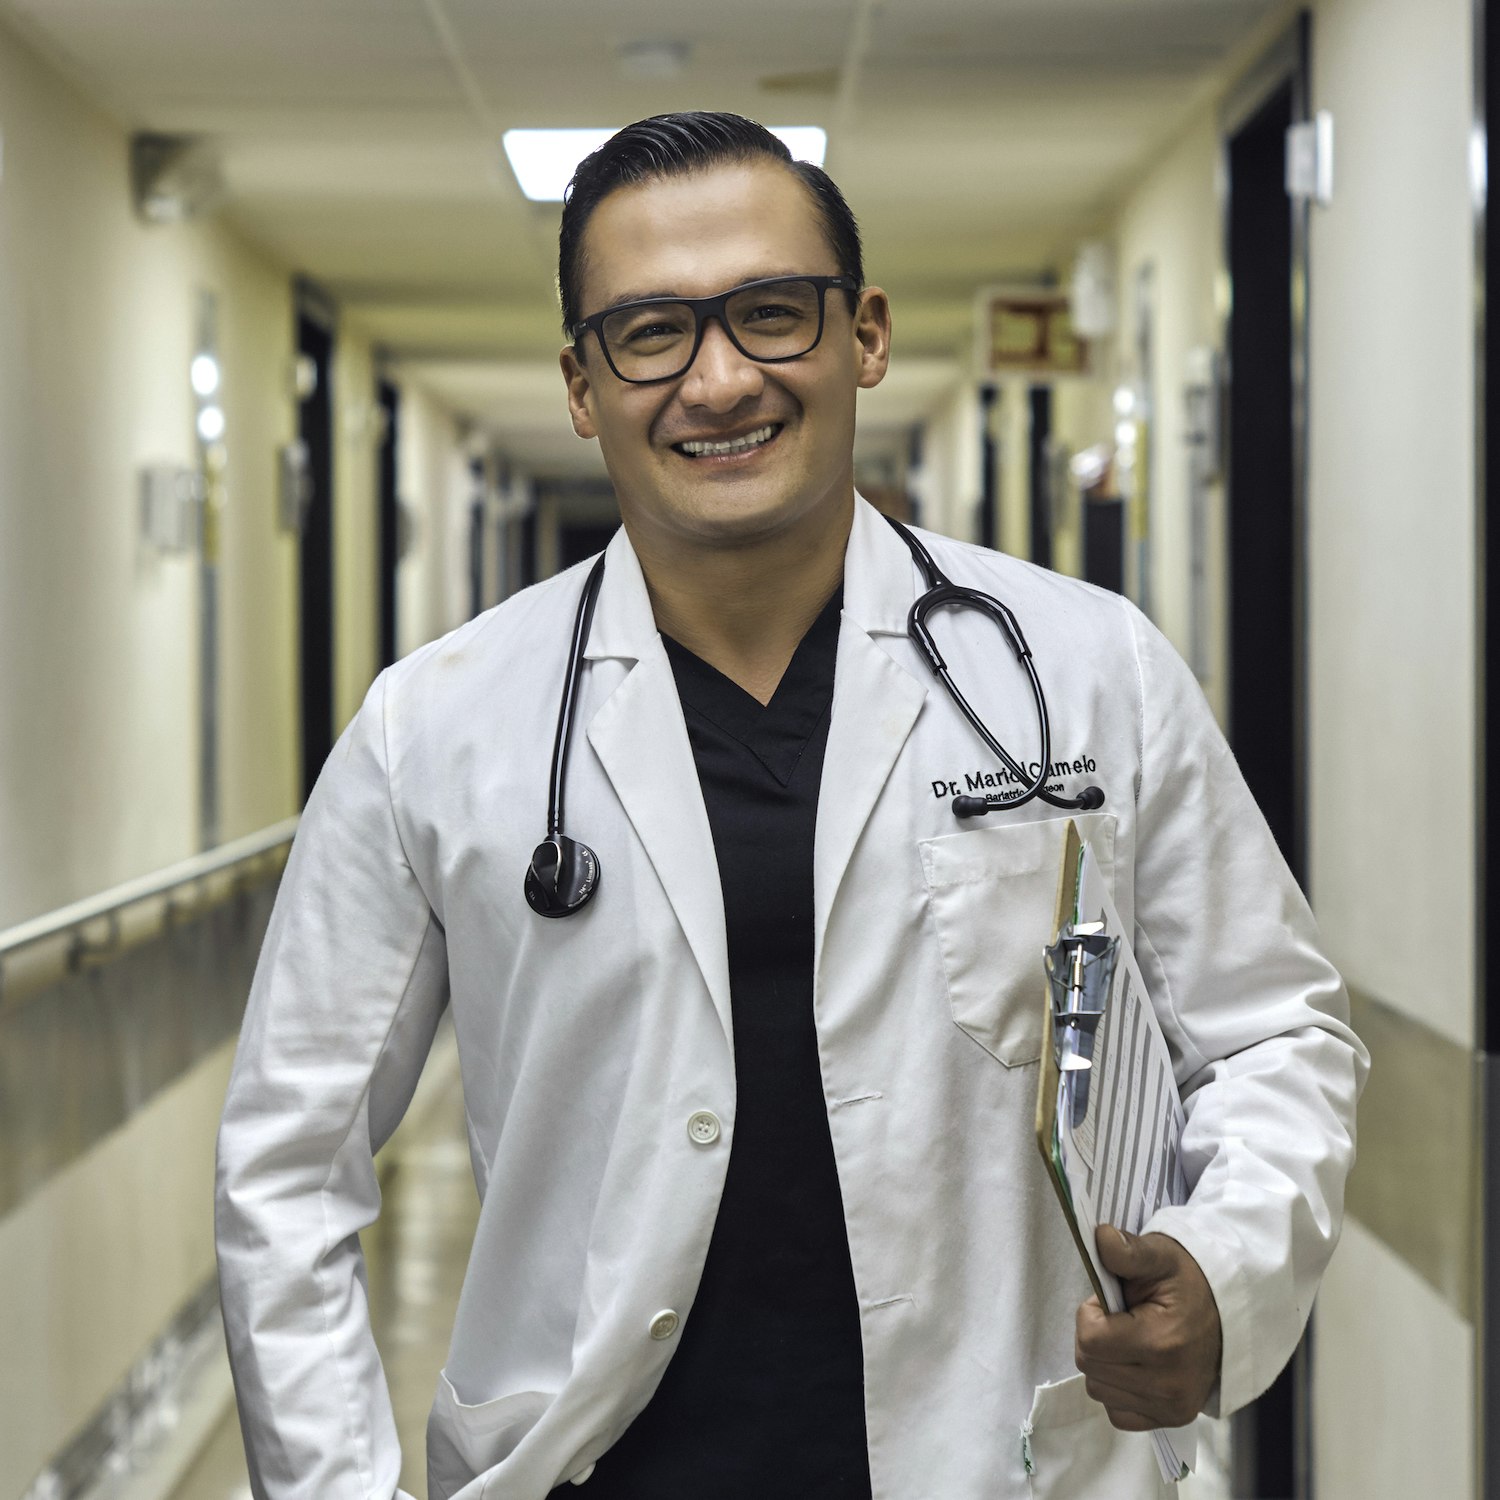 Dr. Mario Camelo Ramos Tijuana, Mexico - Vision Bariatrics